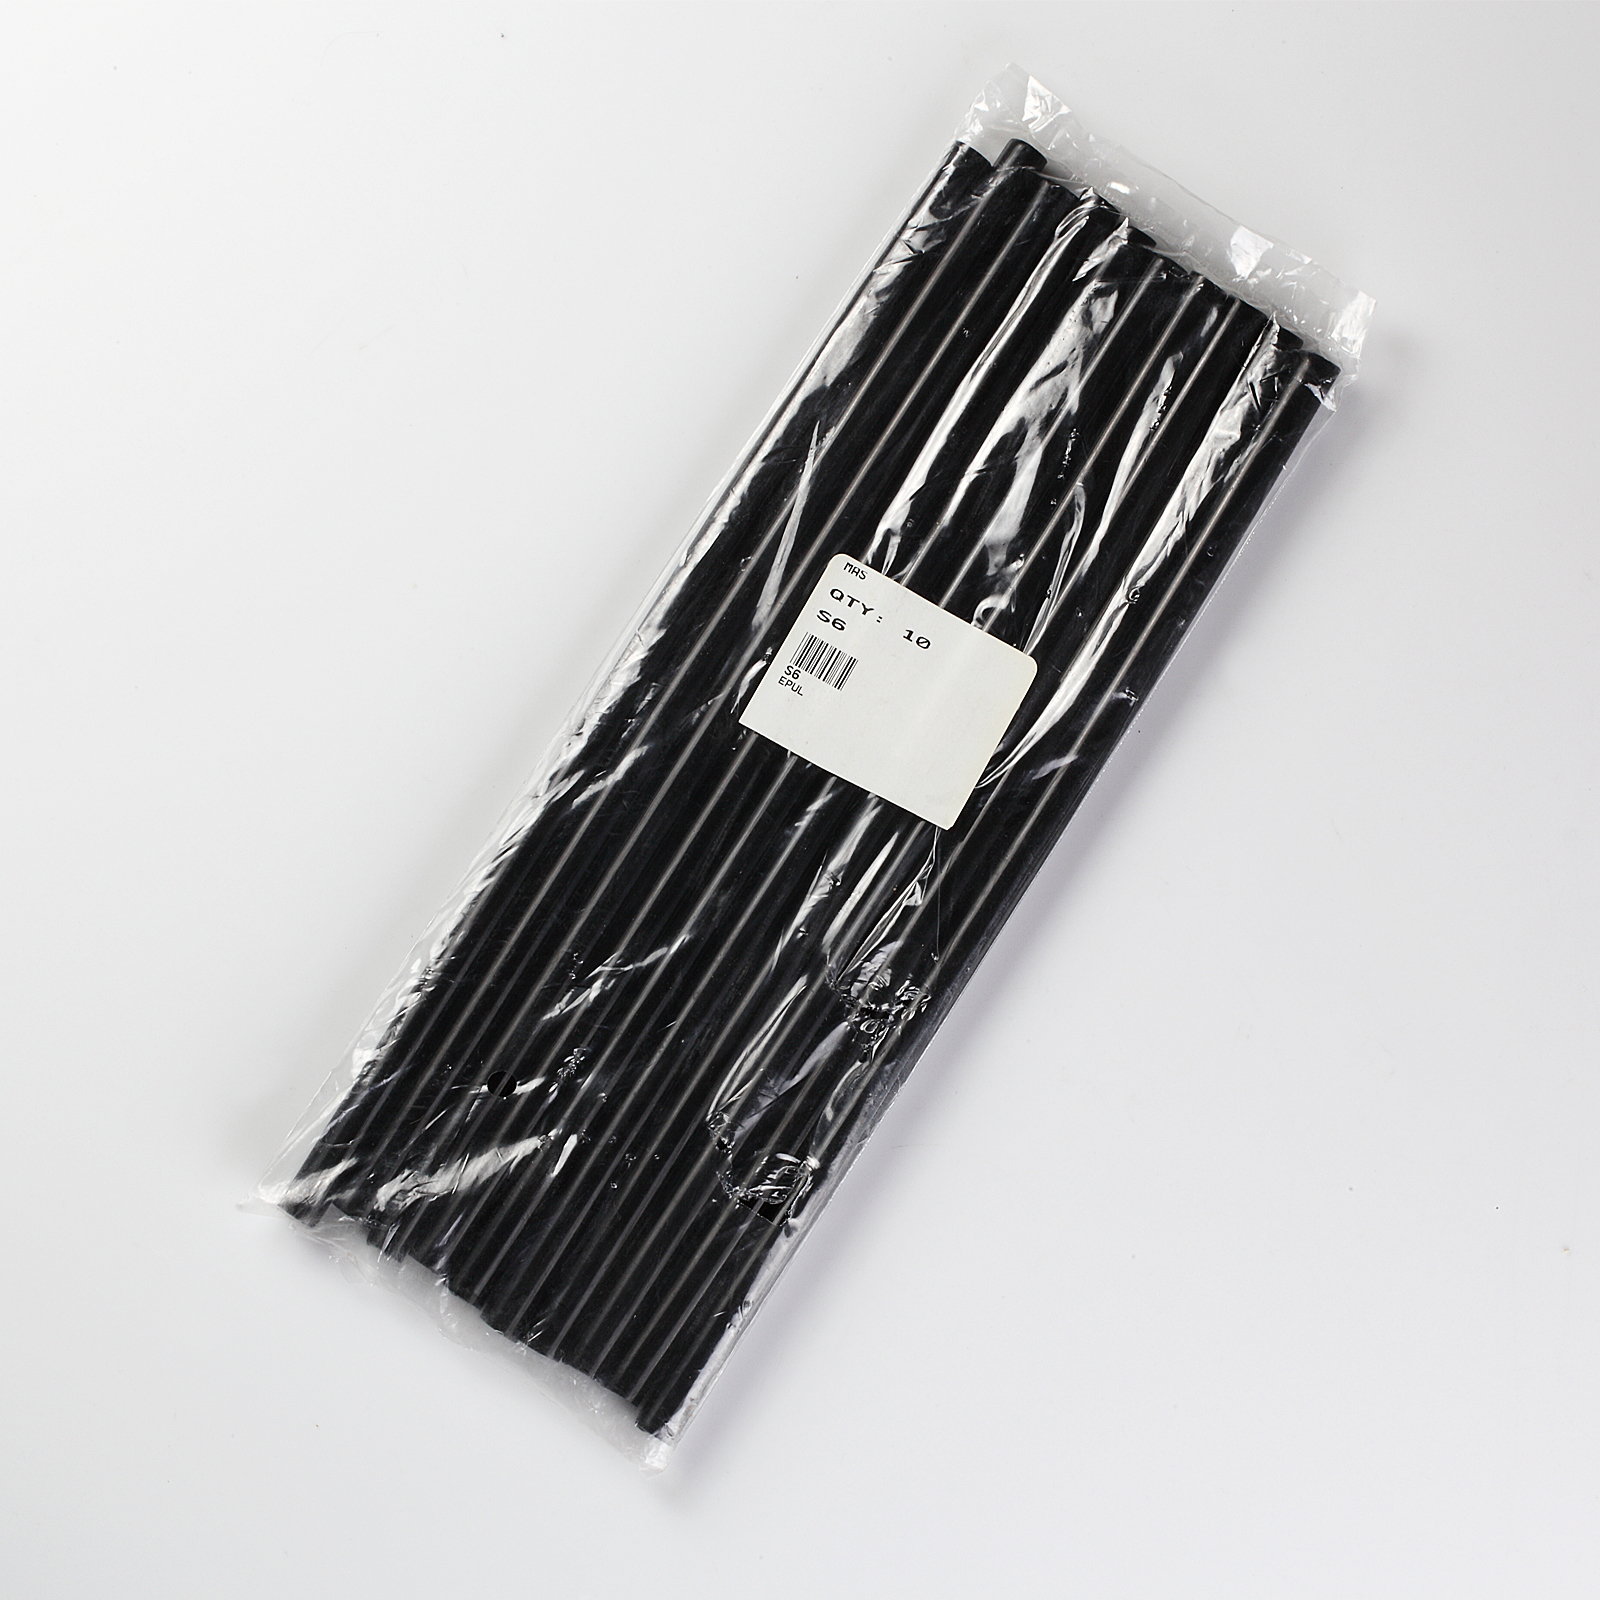 RMRC Hot Glue Sticks - Black (10pcs)